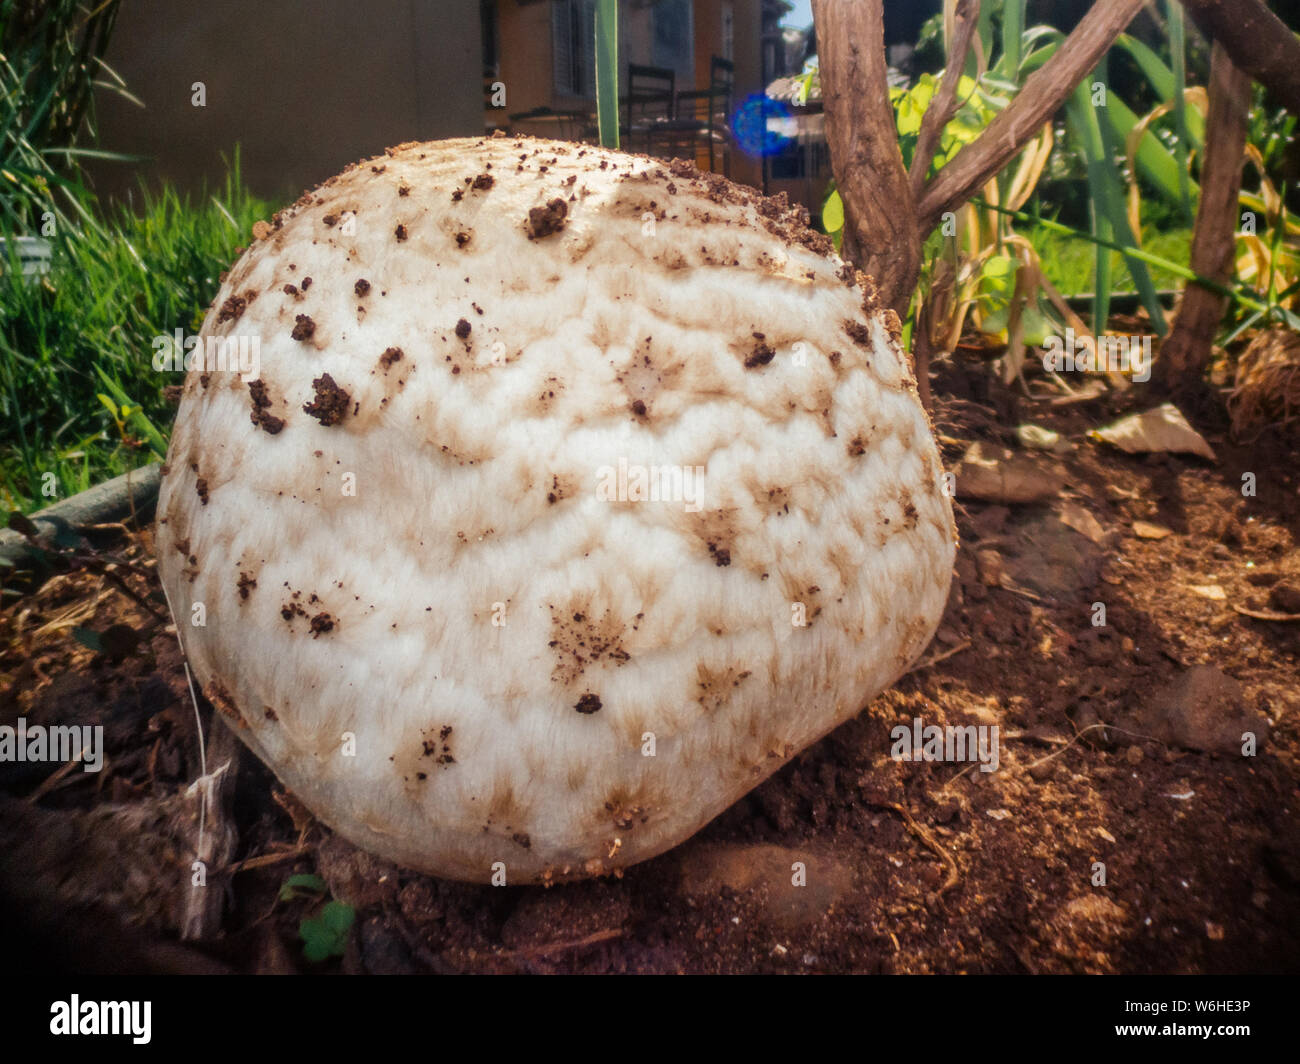 Giant mushroom growing on a yard Stock Photo